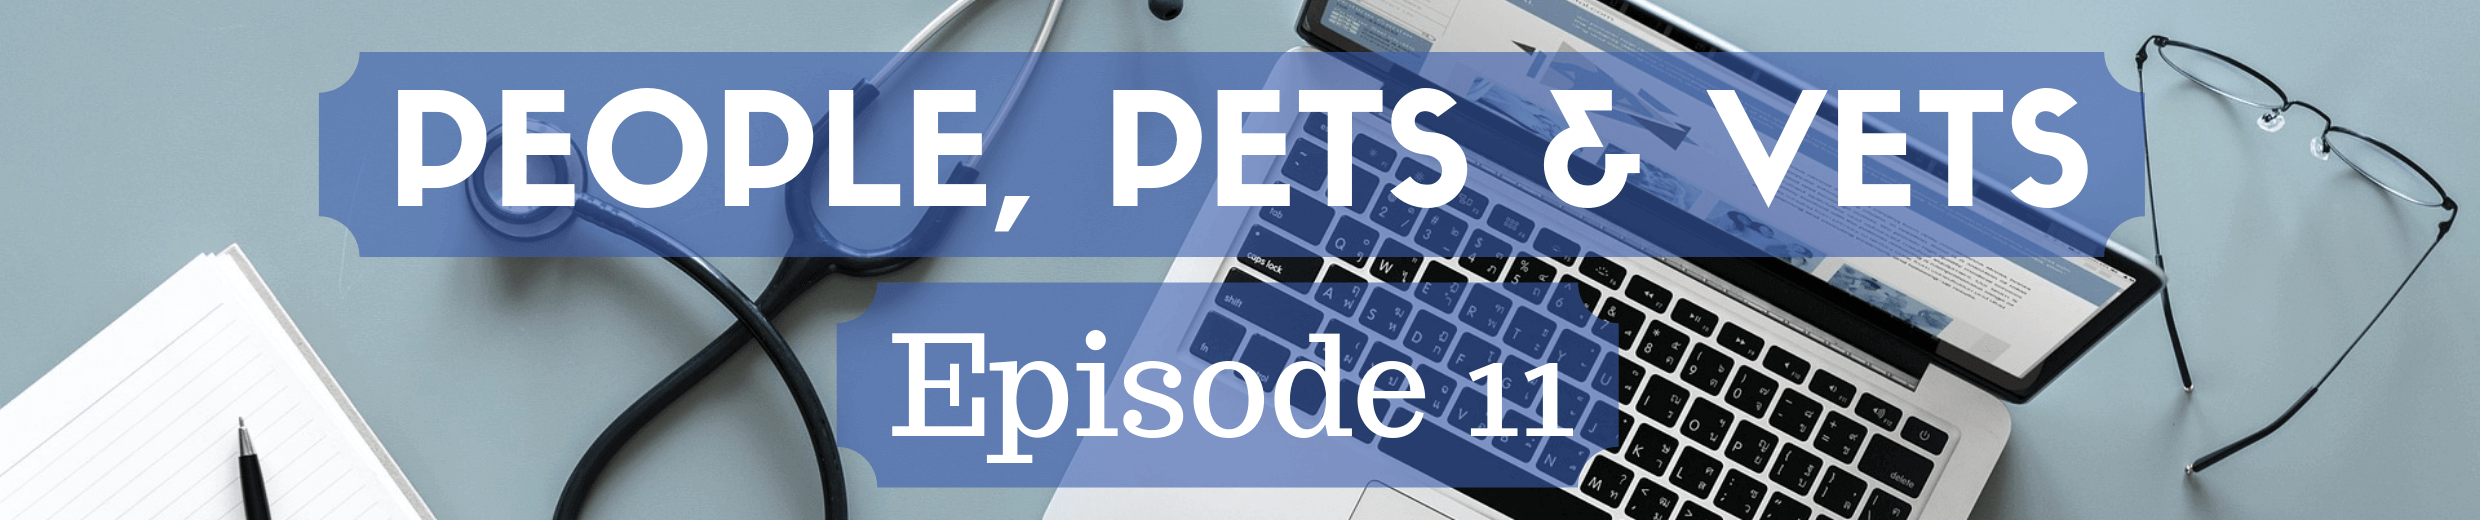 People, Pets & Vets: Episode 11